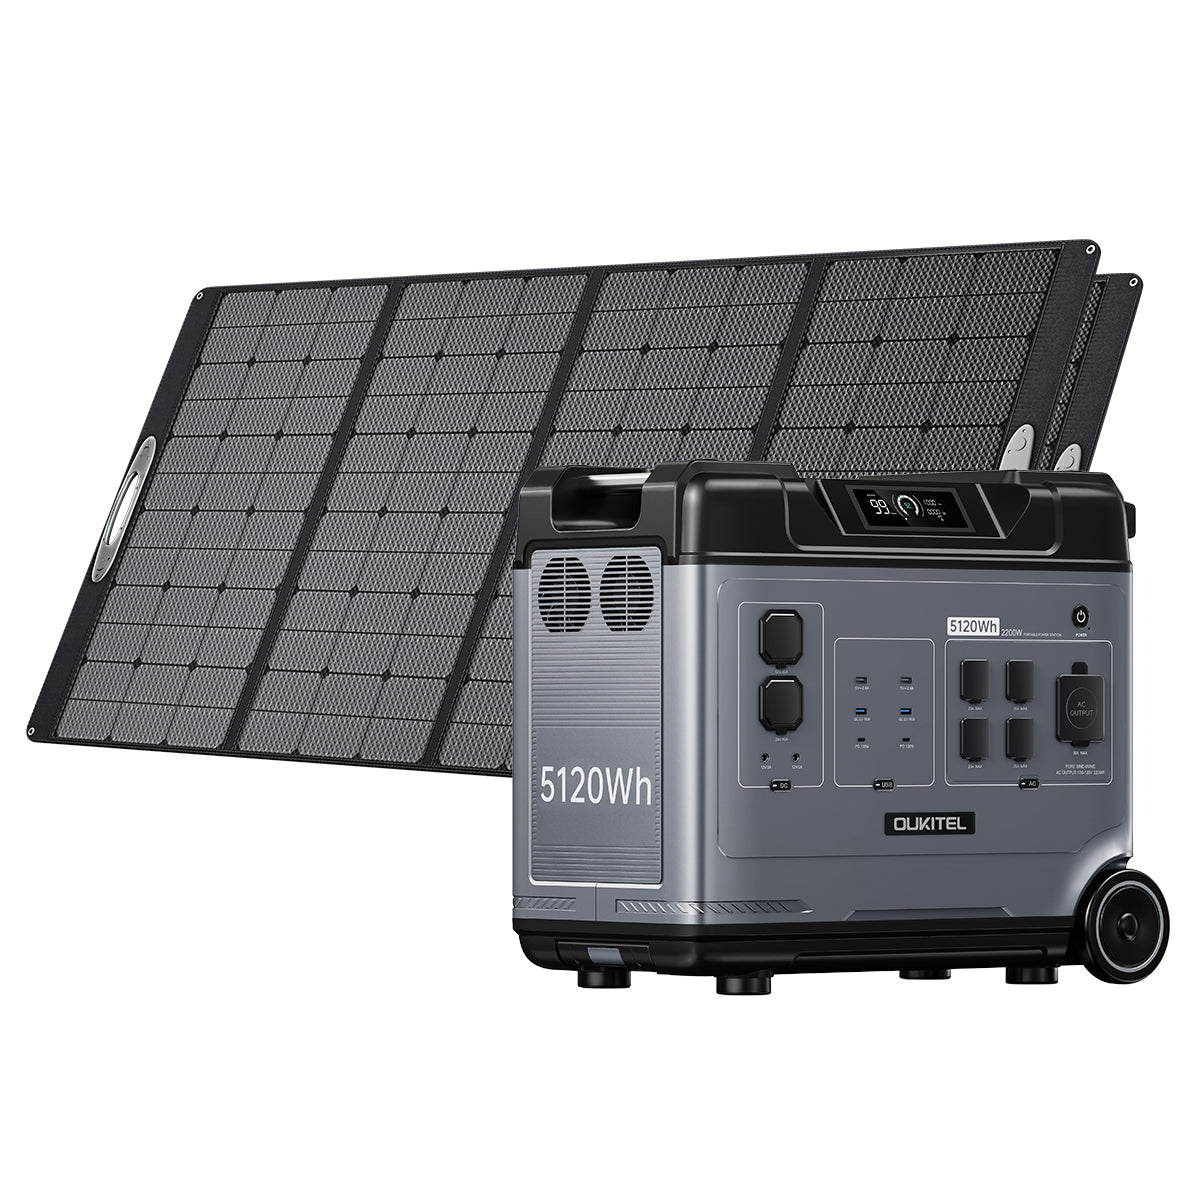 OUKITEL P5000 Home Battery Backup + 2*400W Solar Panels